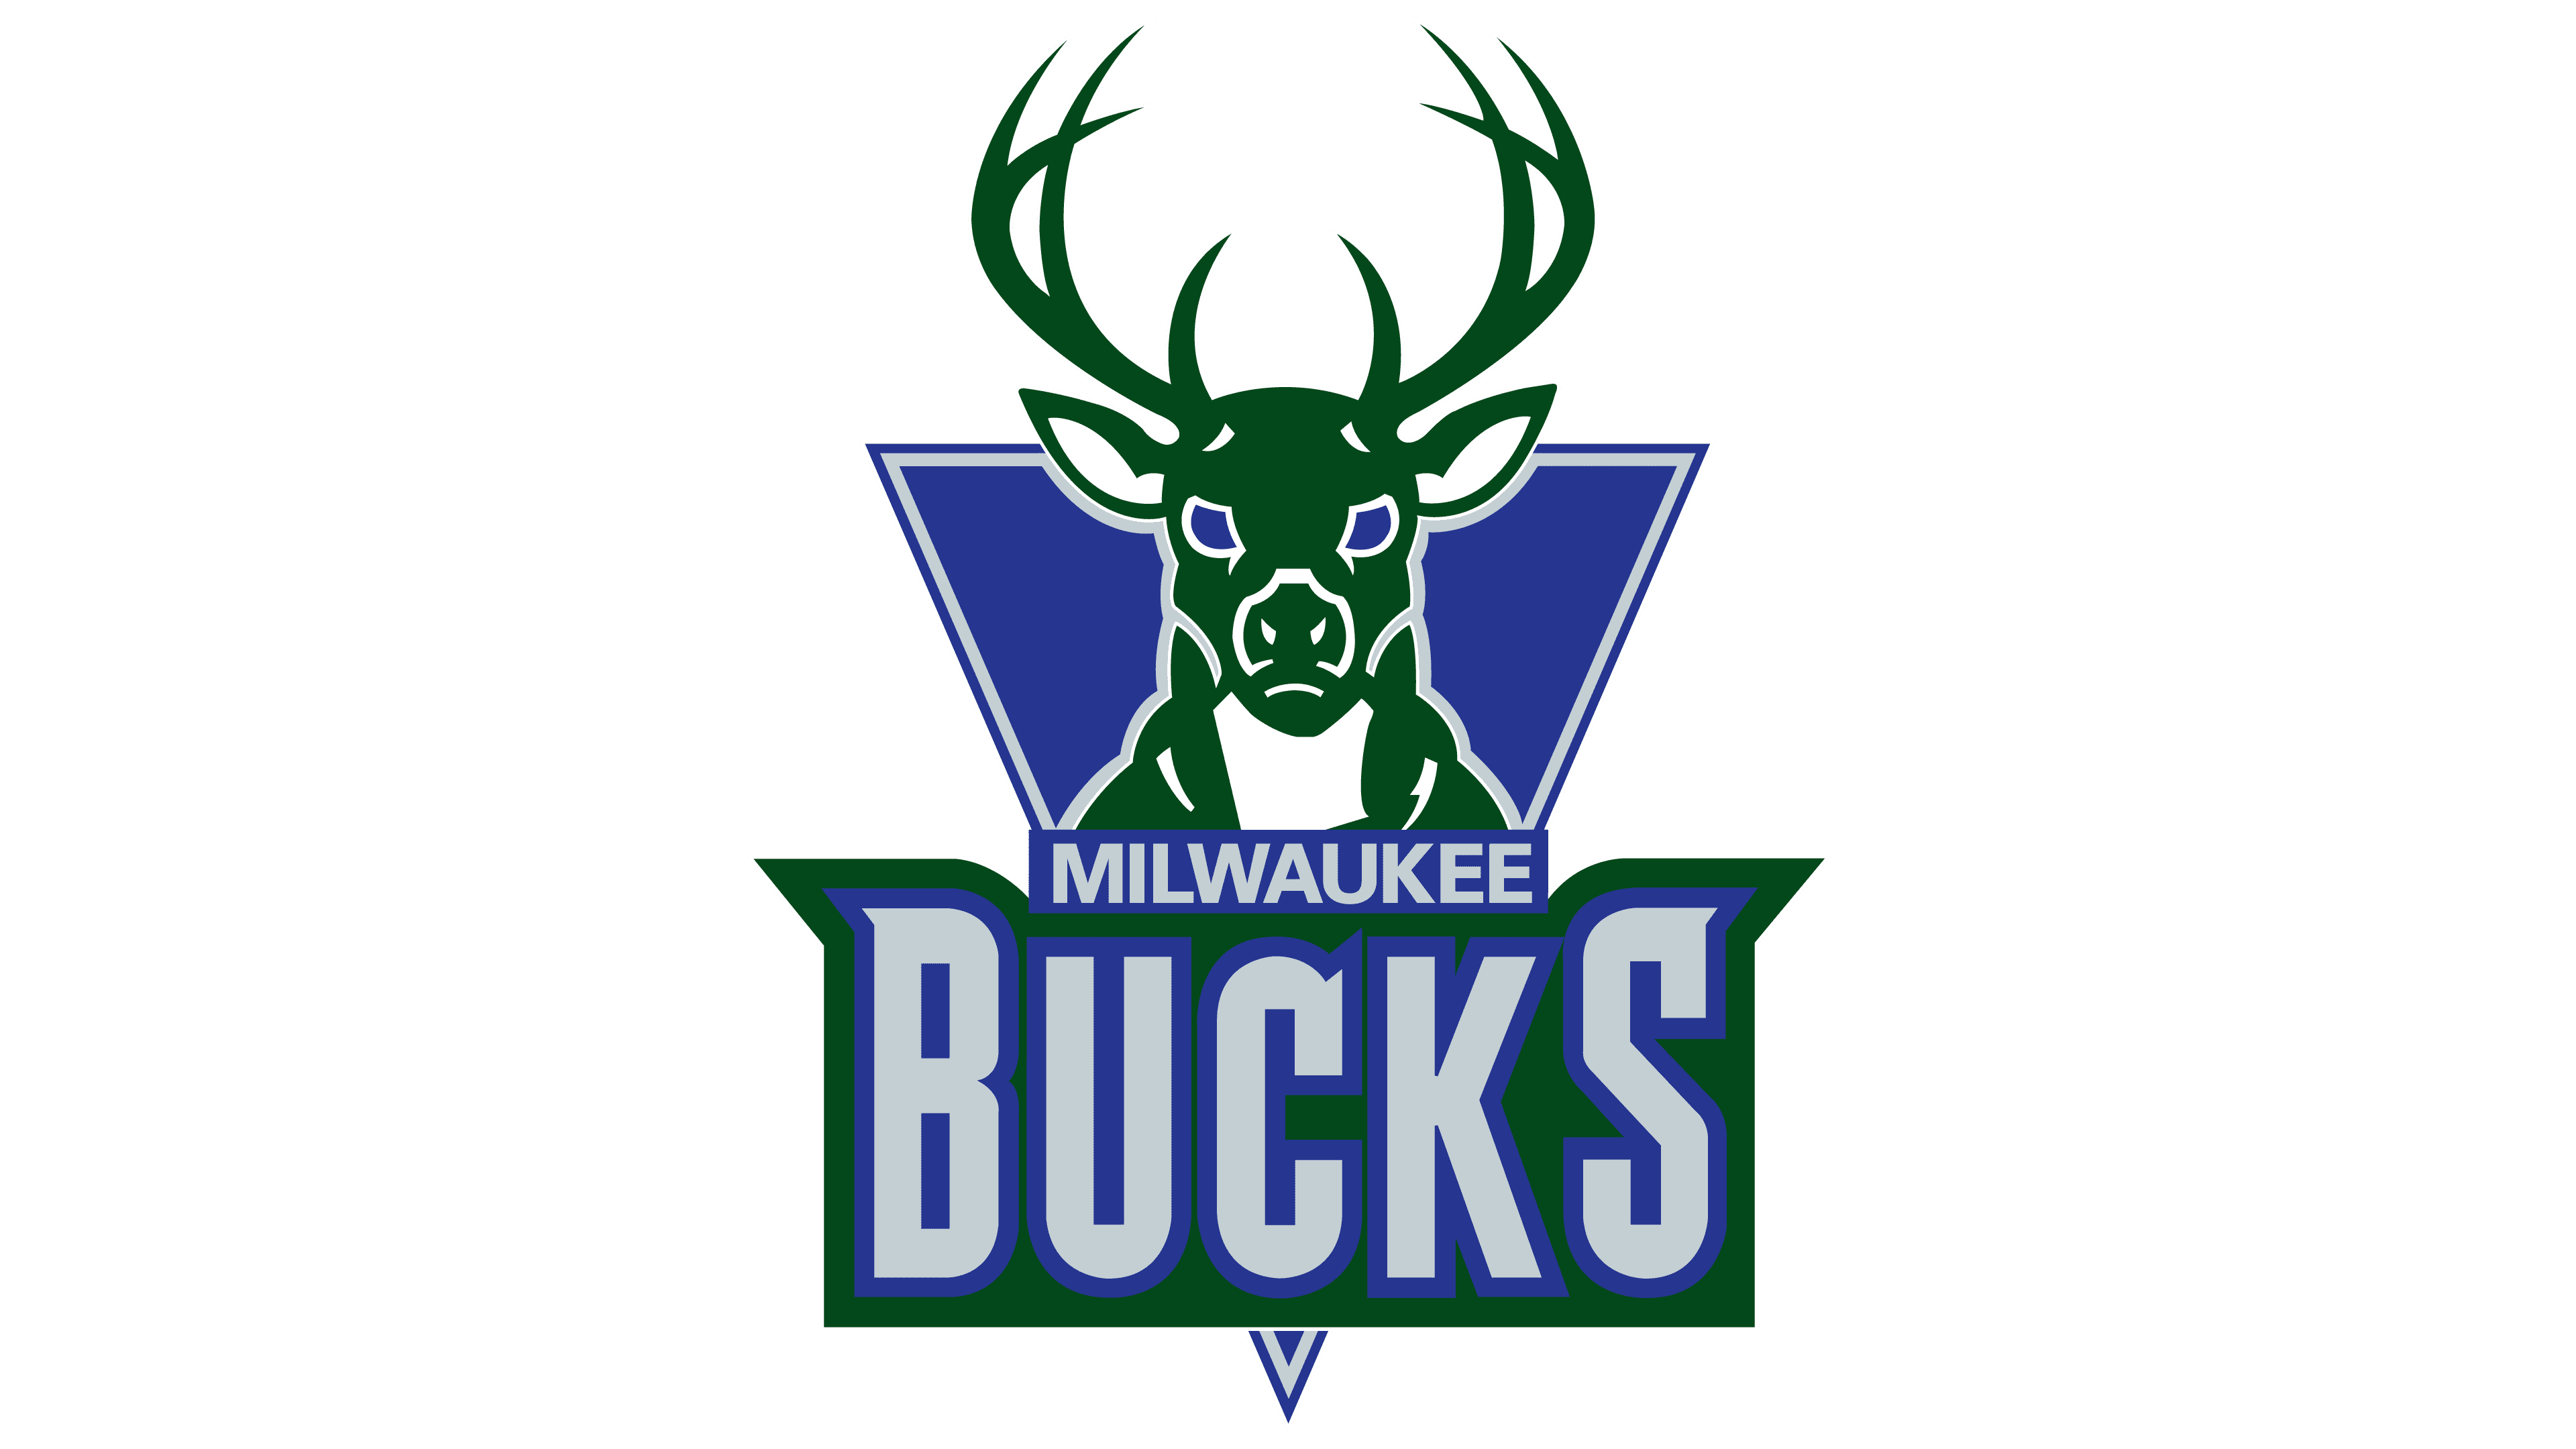 Milwaukee Bucks - Wikipedia